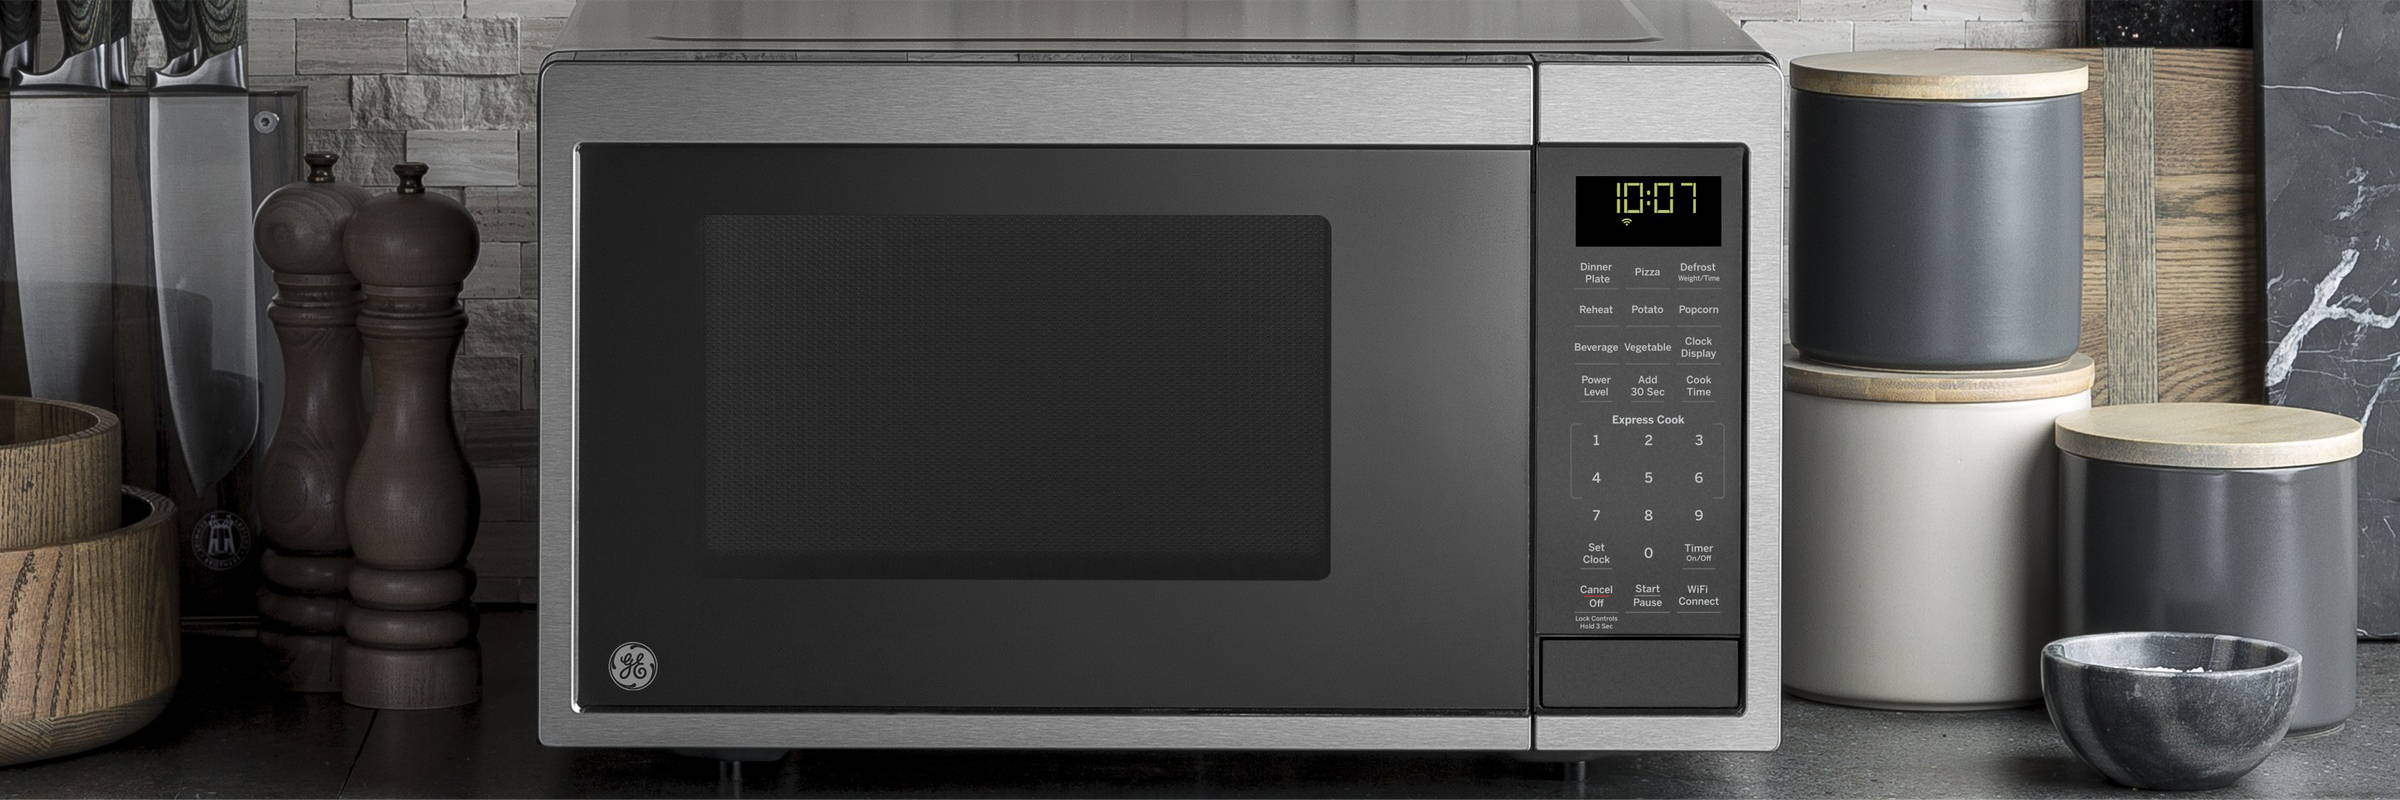 GE Smart Microwave Ovens | GE Appliances